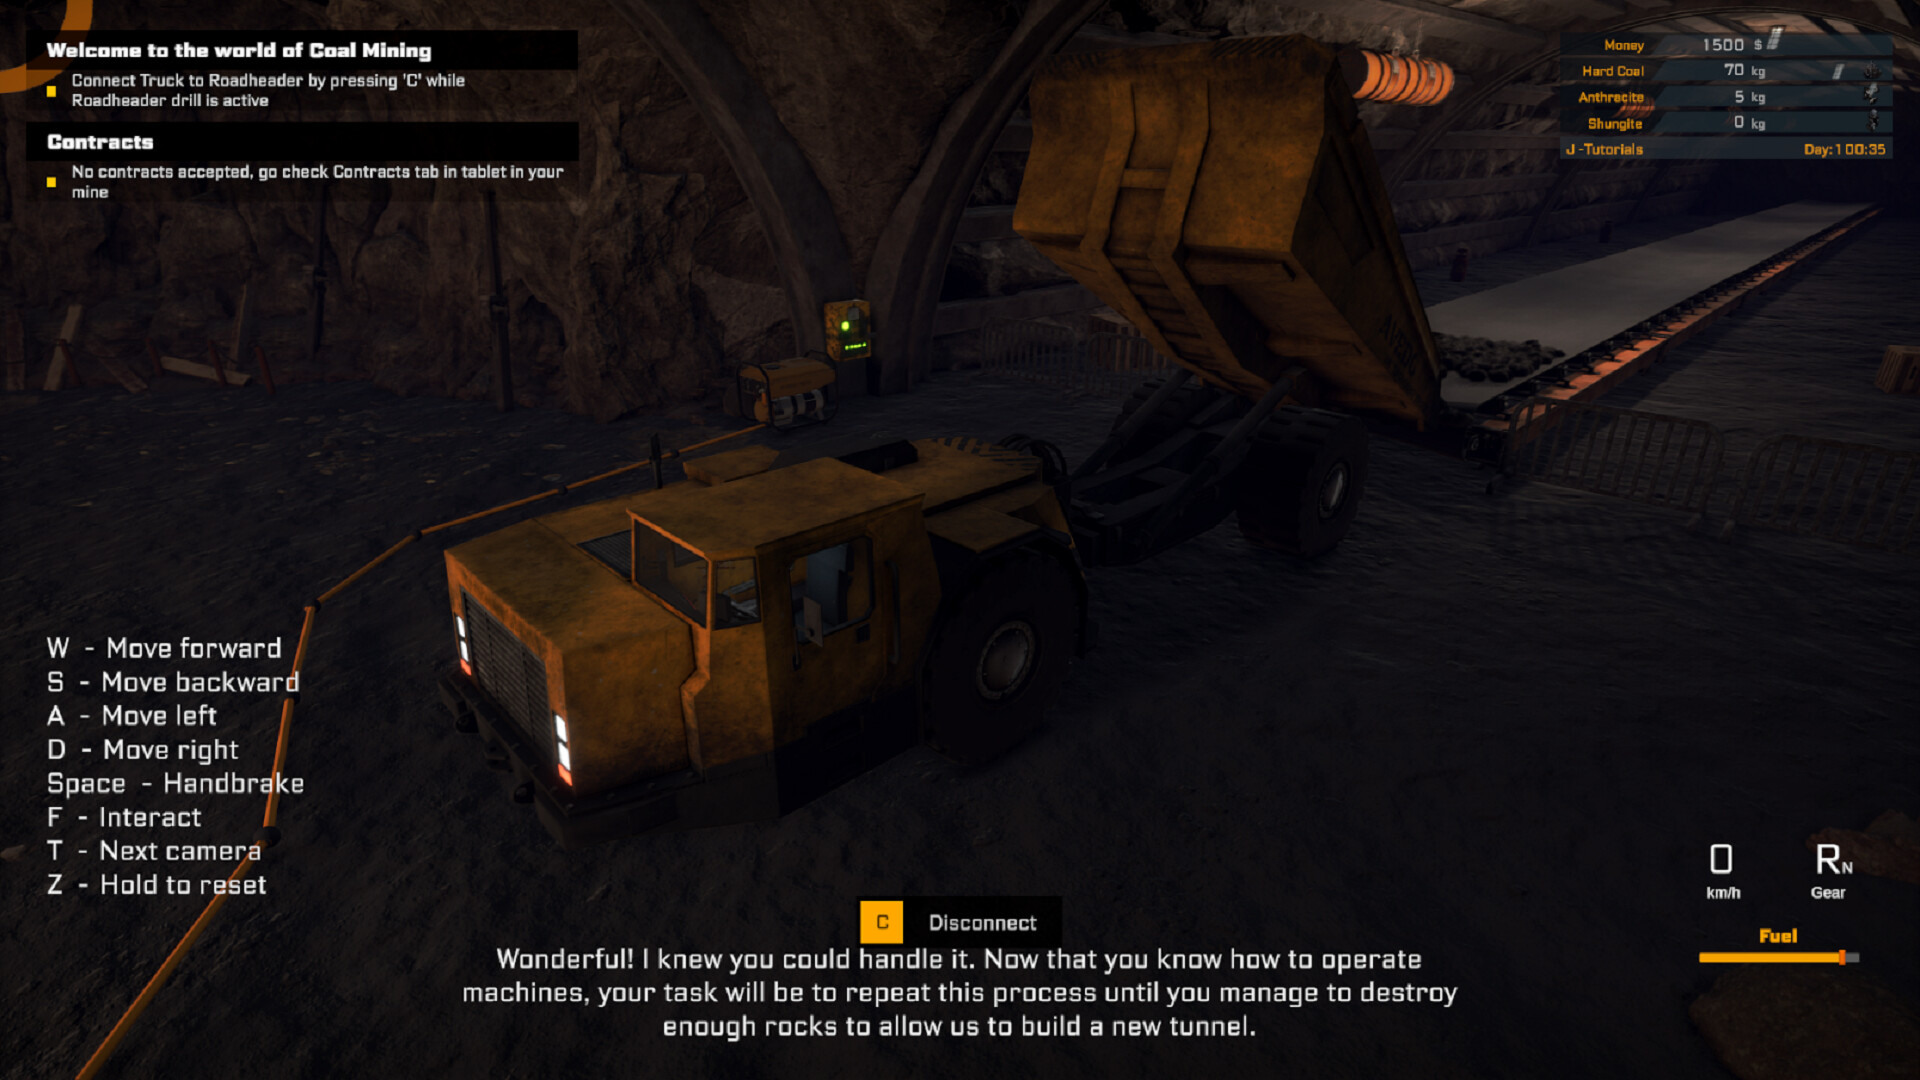 Mining Simulator on Steam